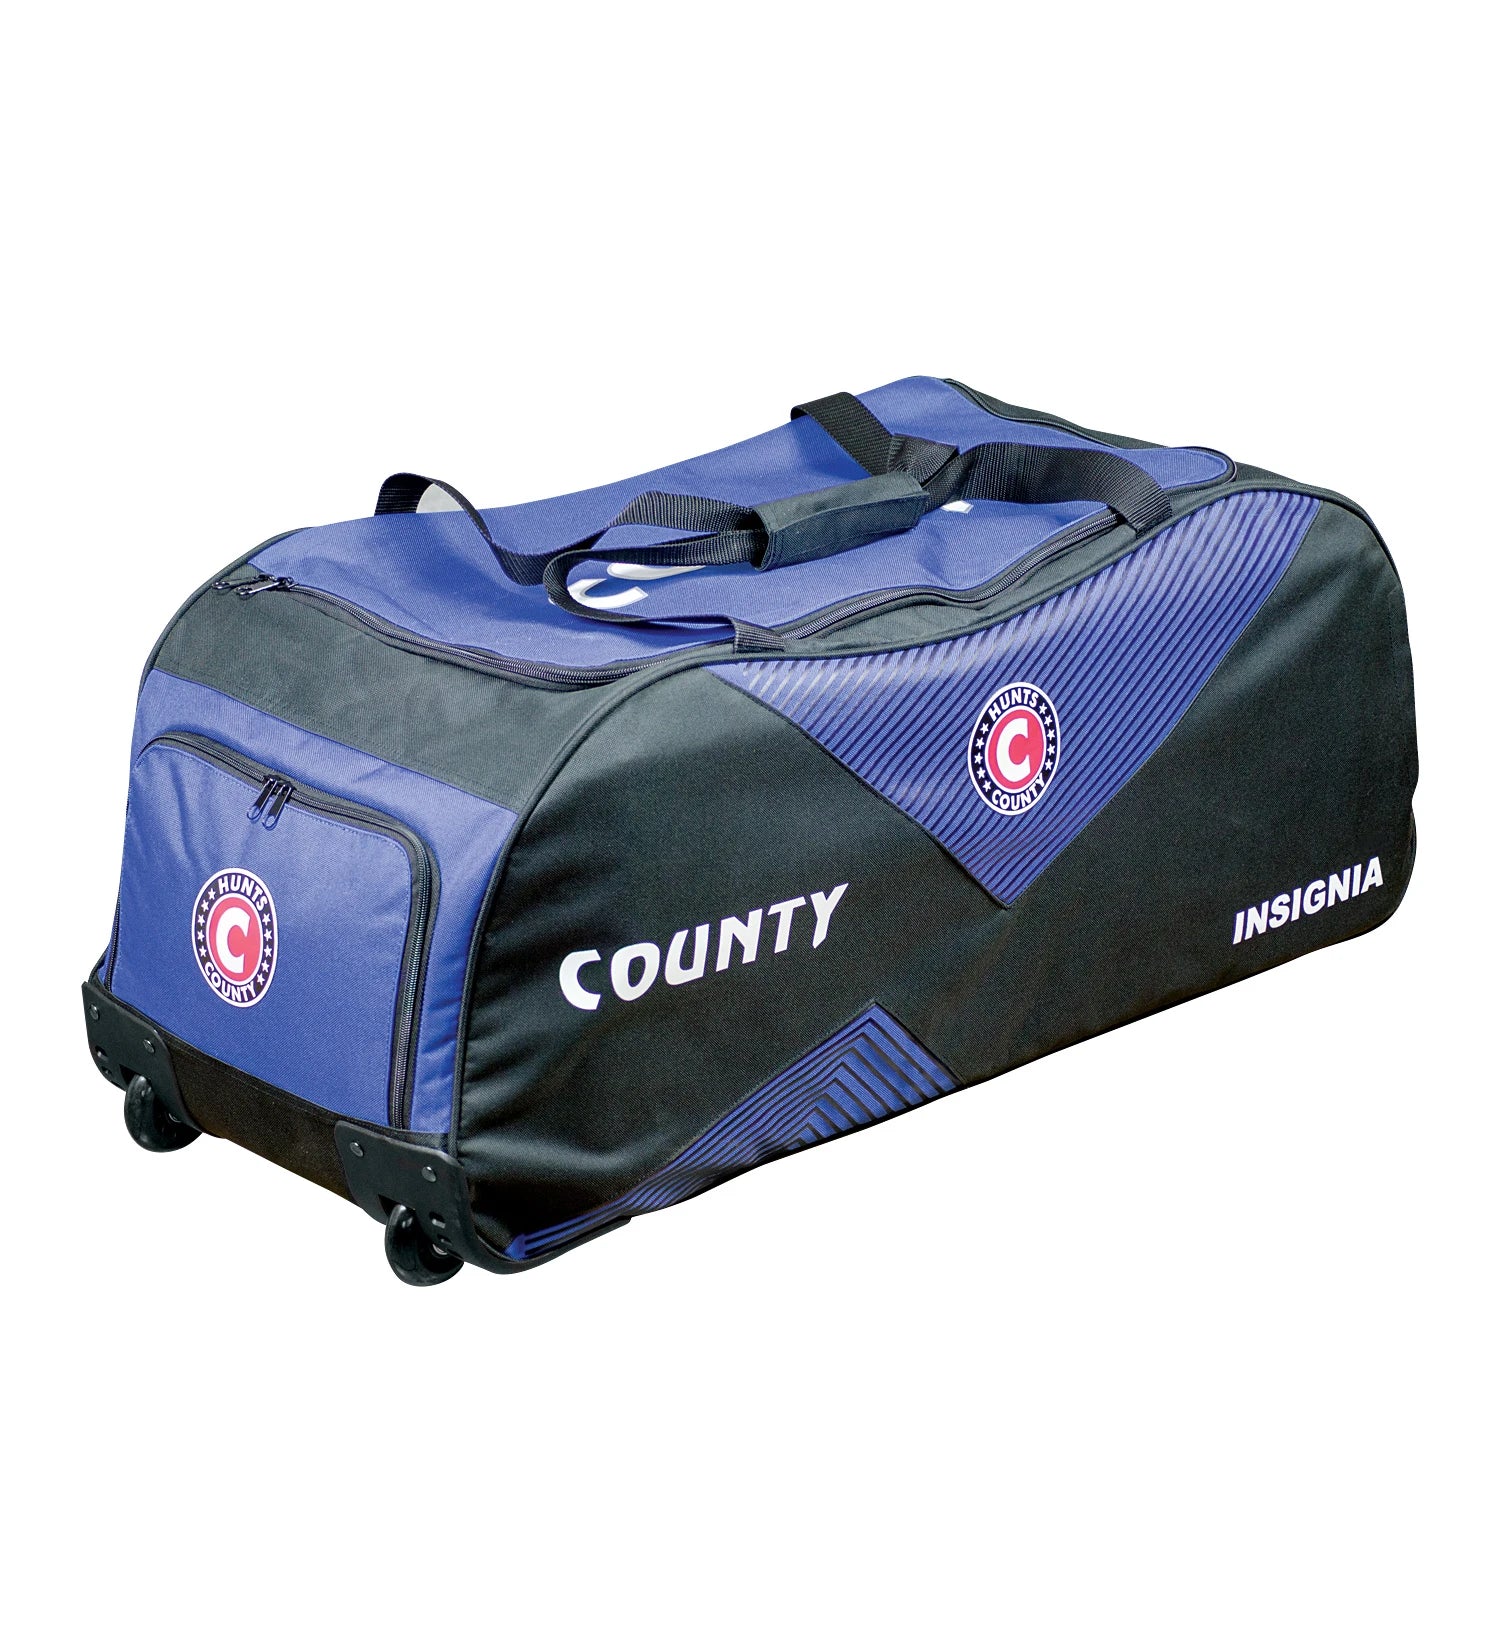 Hunts County Insignia Wheelie Bag